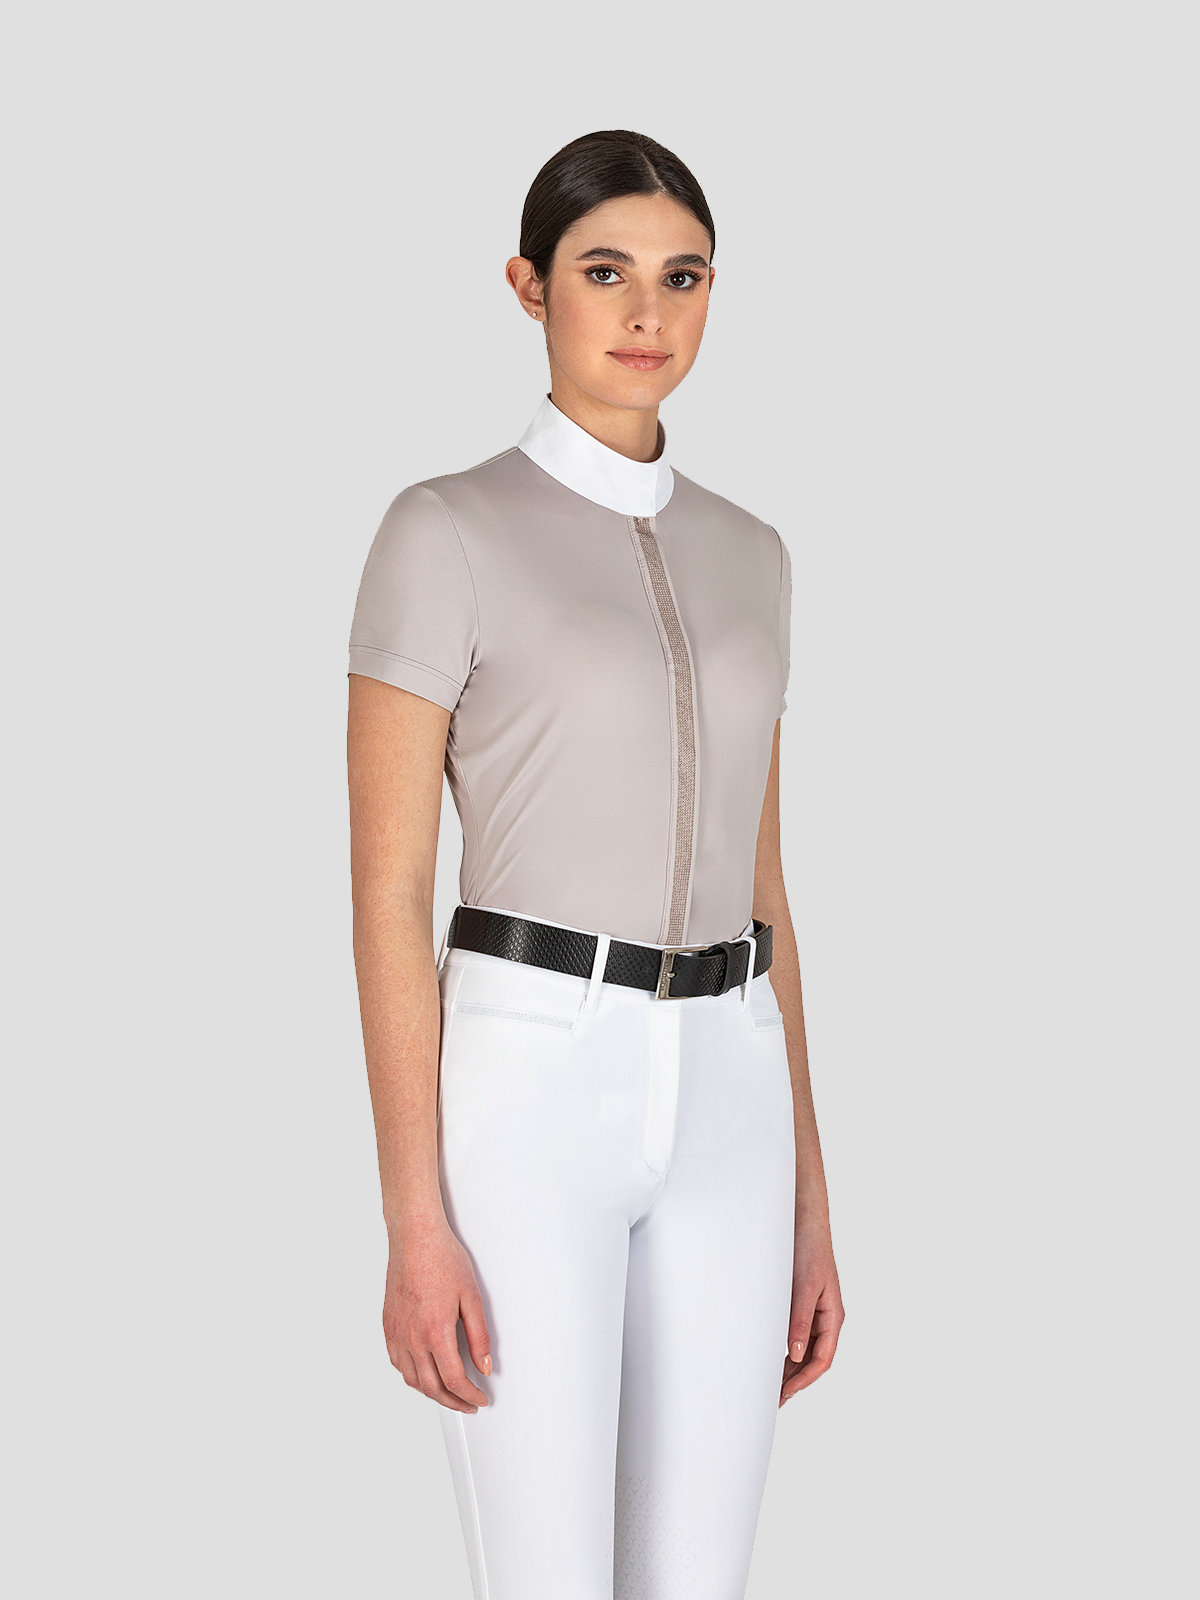 Esade Short Sleeve Women's Show Shirt - front view